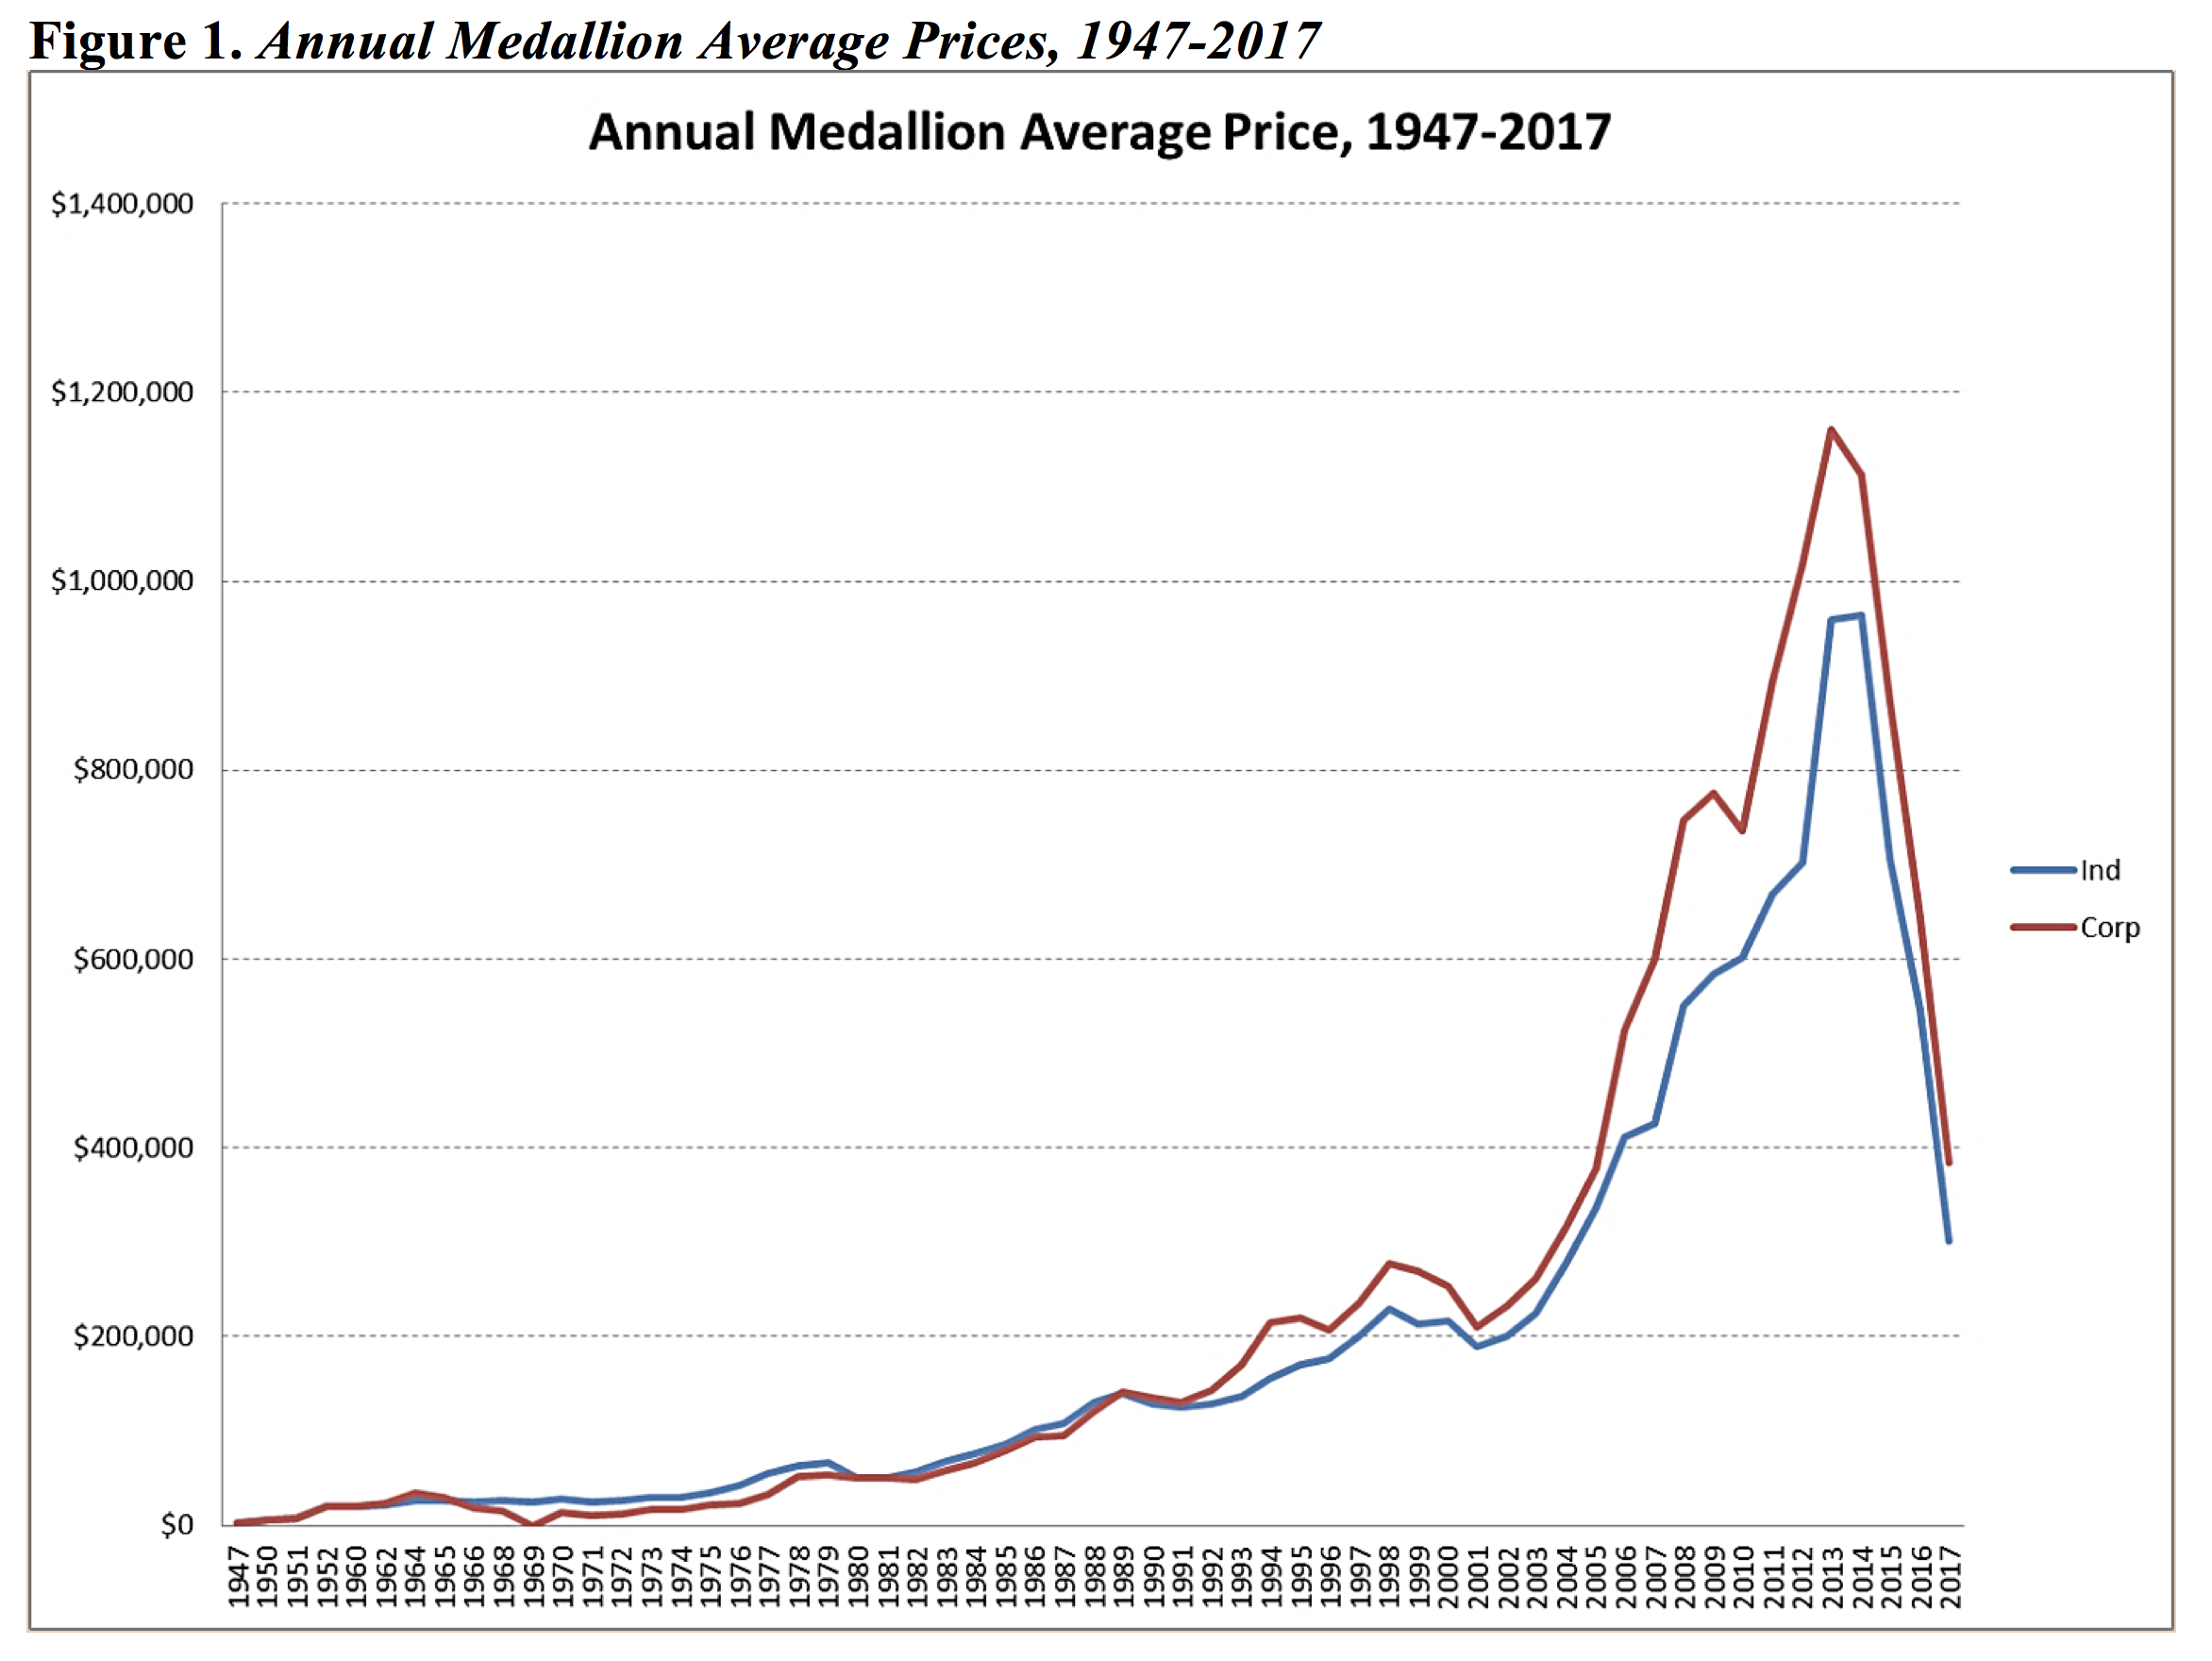 Figure 1. Annual Medallion Average Prices, 1947-2017